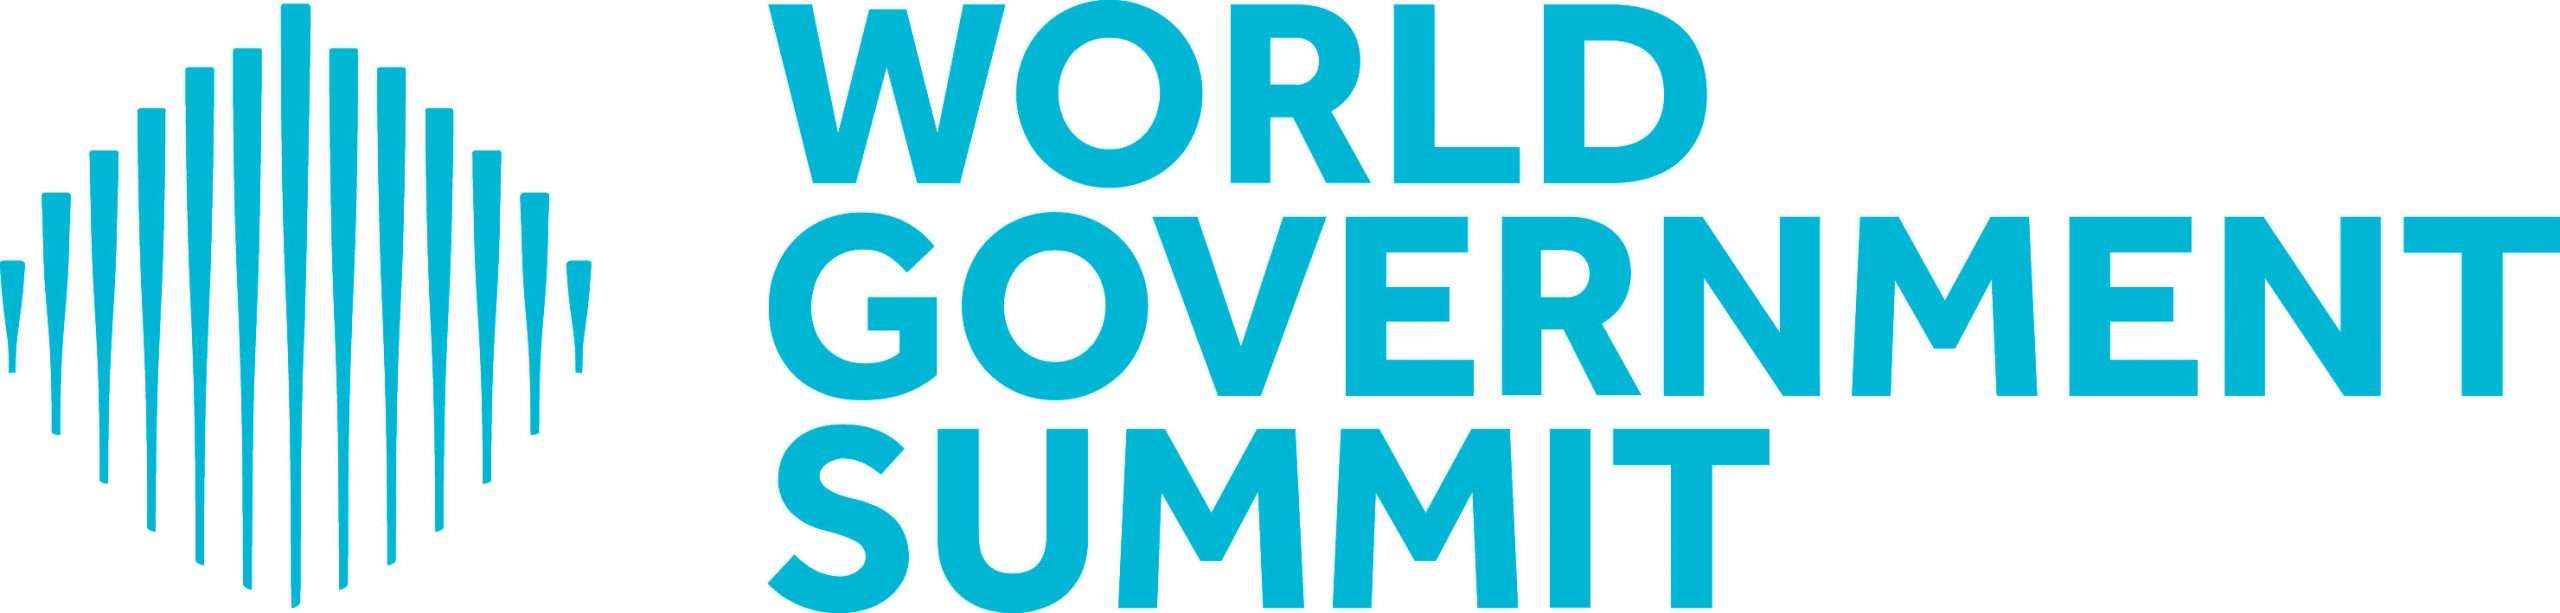 World Government Summit y empresas. Grada 178. Cristina Alonso